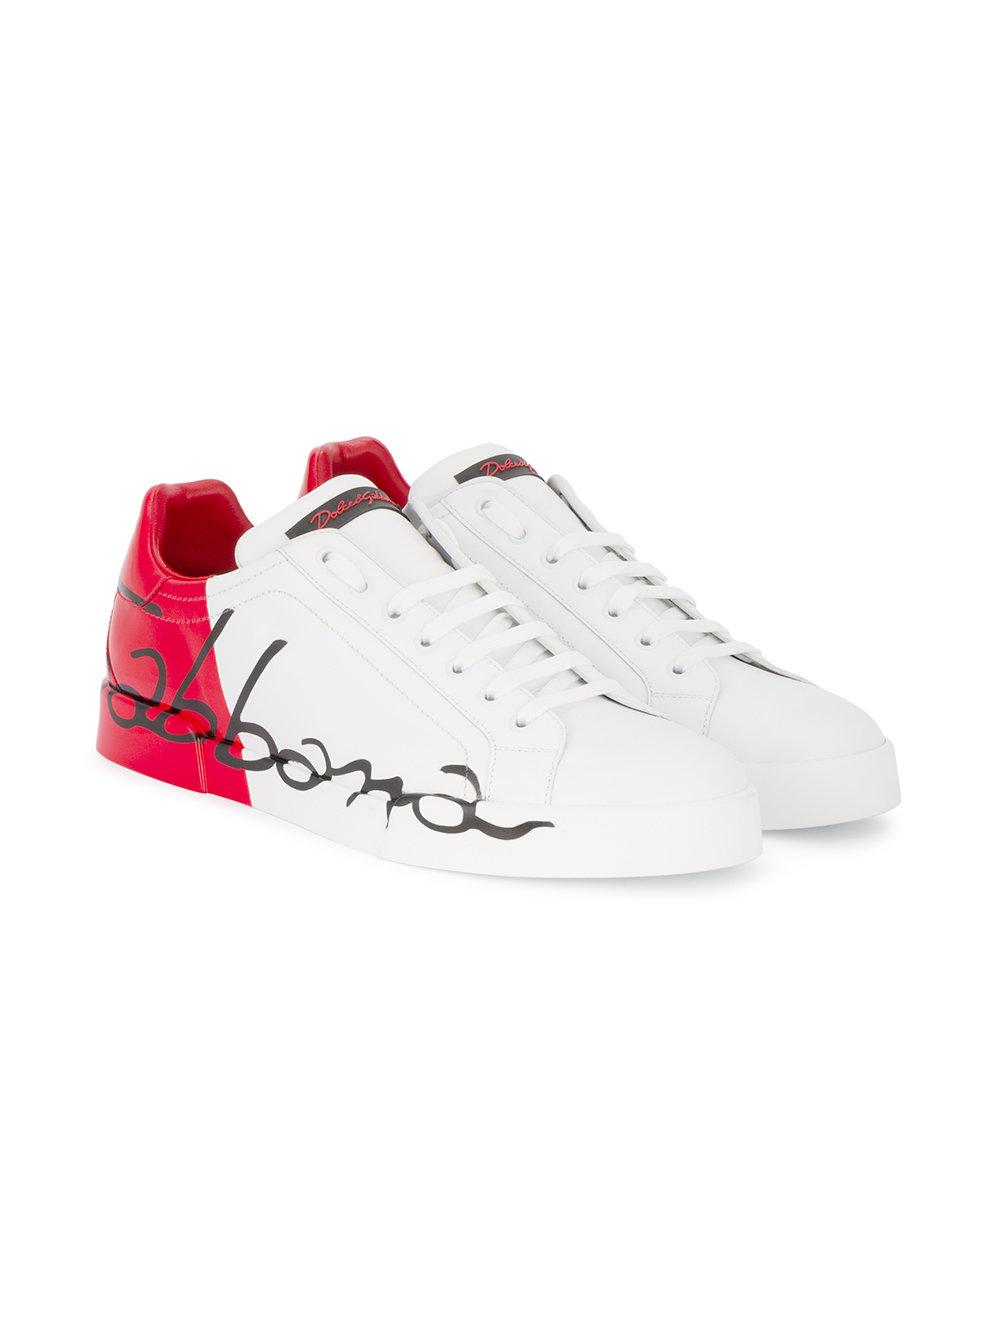 Dolce & Gabbana Leather Portofino Red Sneakers in White for Men | Lyst